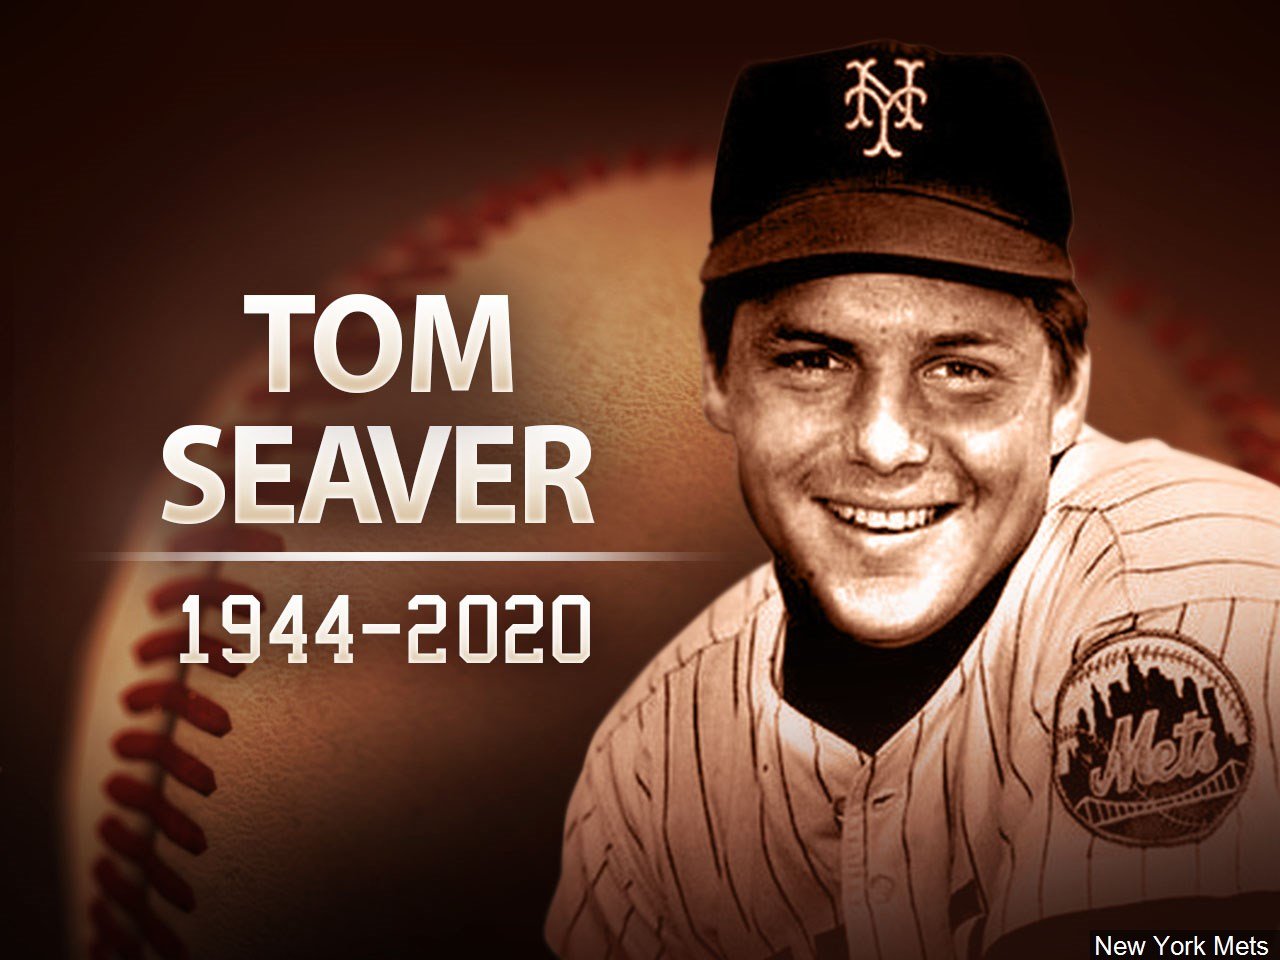 Tom Seaver dies at 75